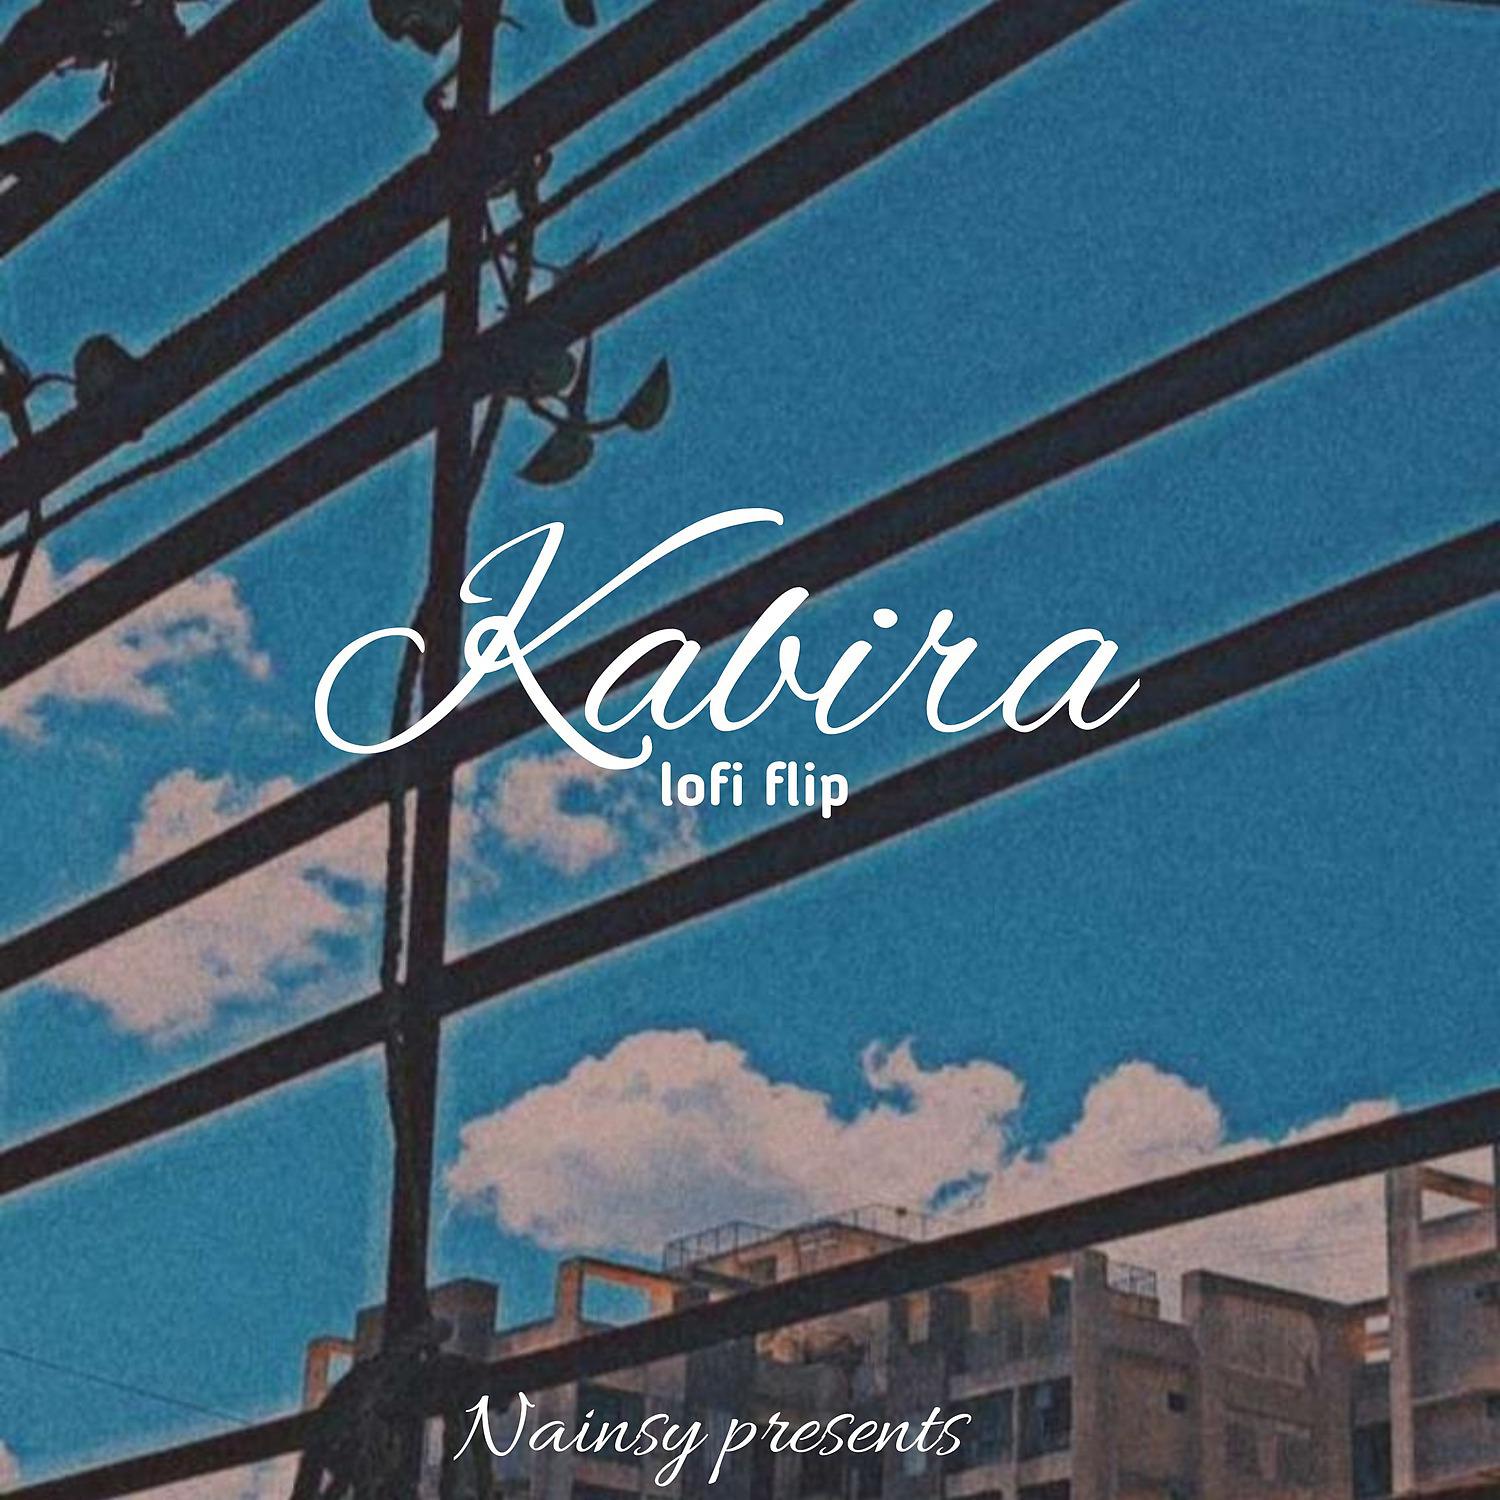 Постер альбома Kabira